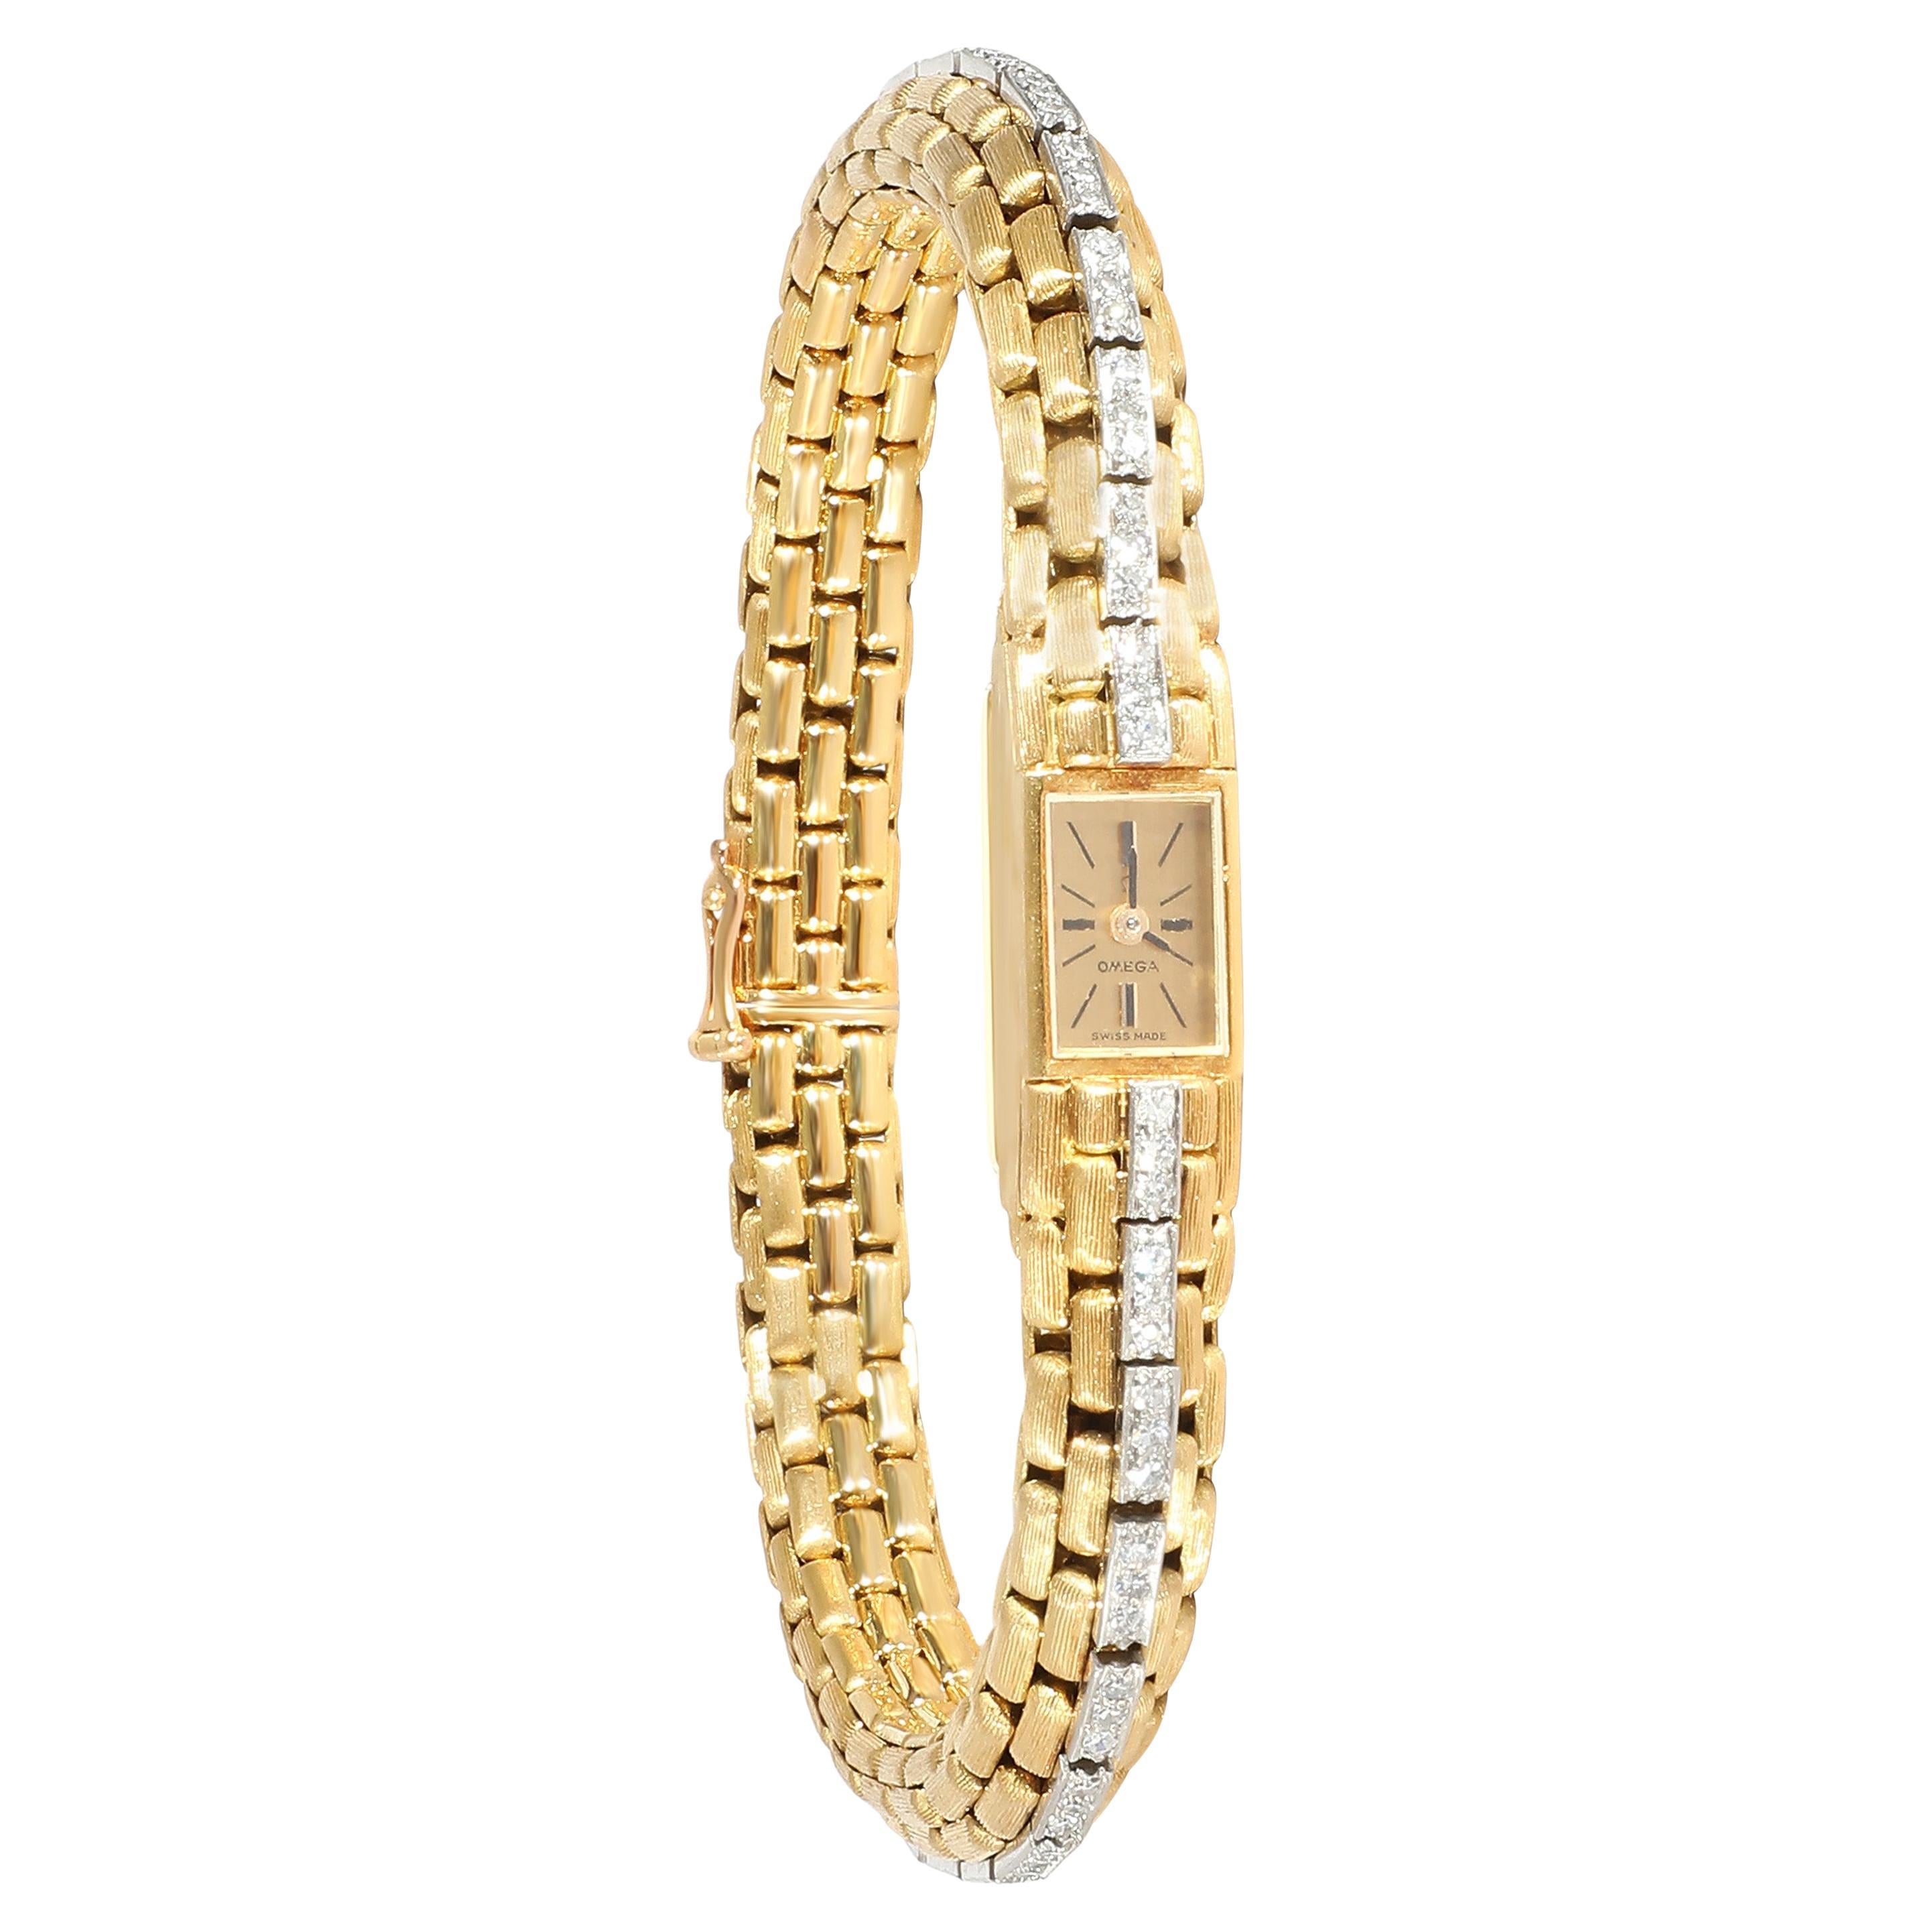 Omega, montre habillée vintage pour femmes en or jaune 18 carats